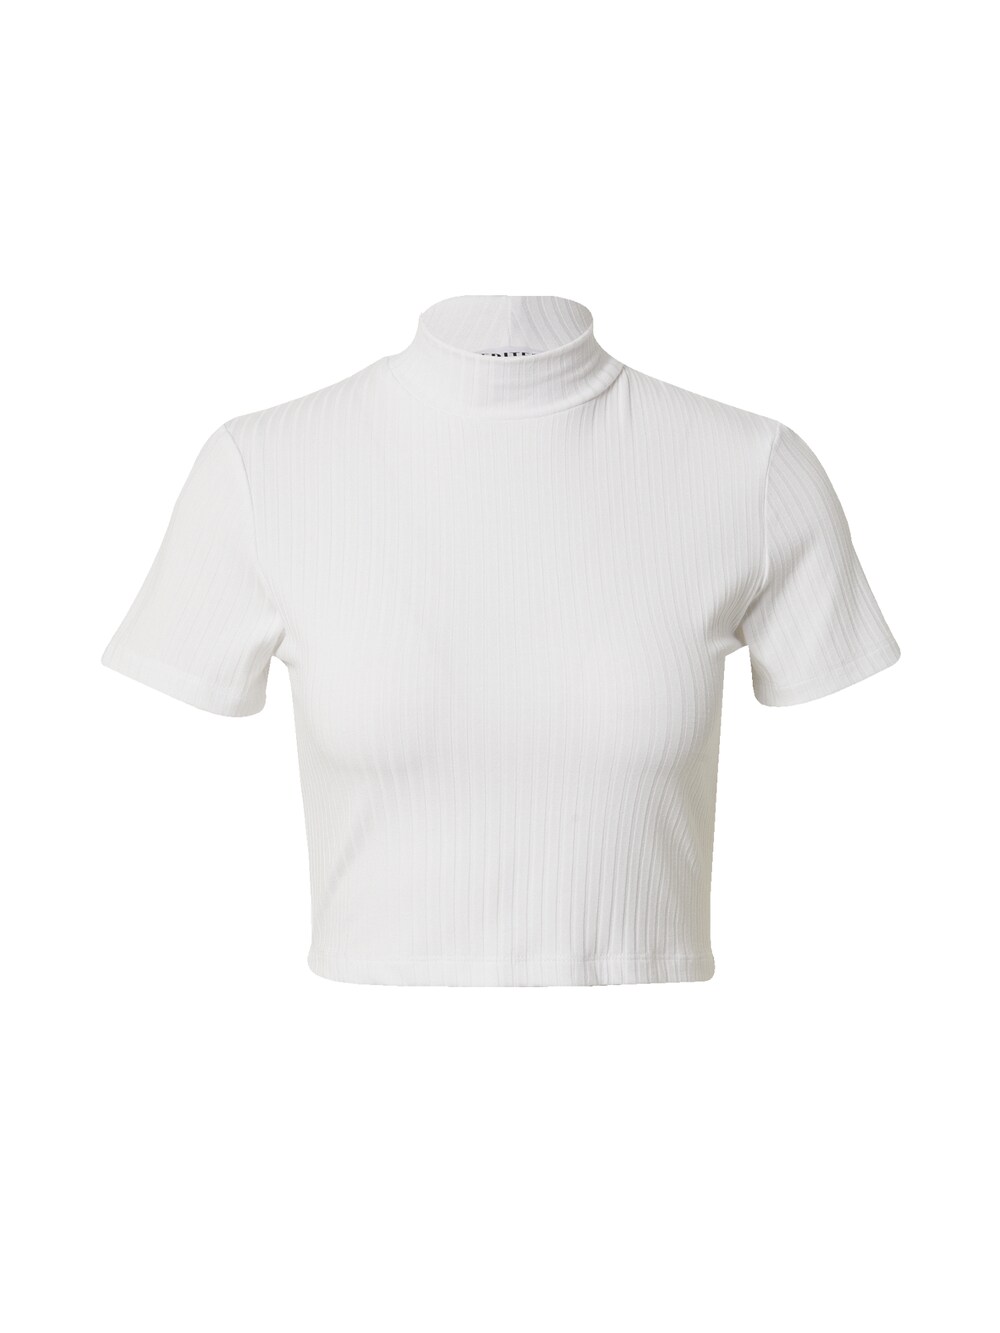 Рубашка EDITED Kevina, белый рубашка edited ester белый